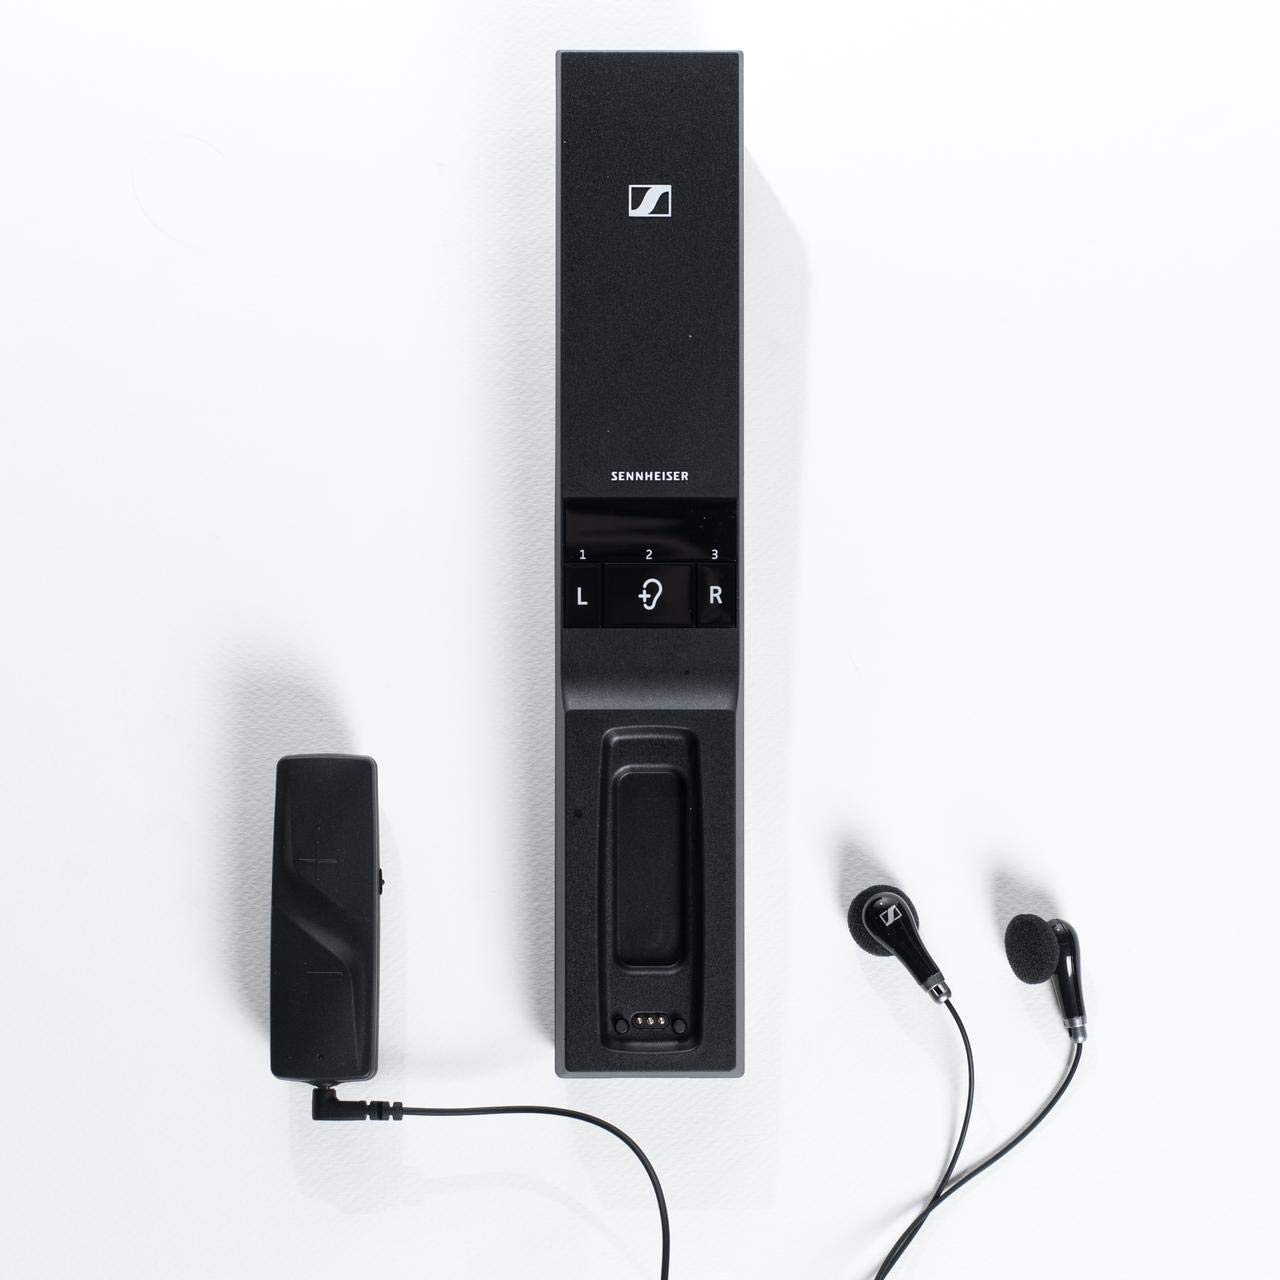 Sennheiser Consumer Audio Flex 5000 用于电视收听的数字无线耳机 - 黑色